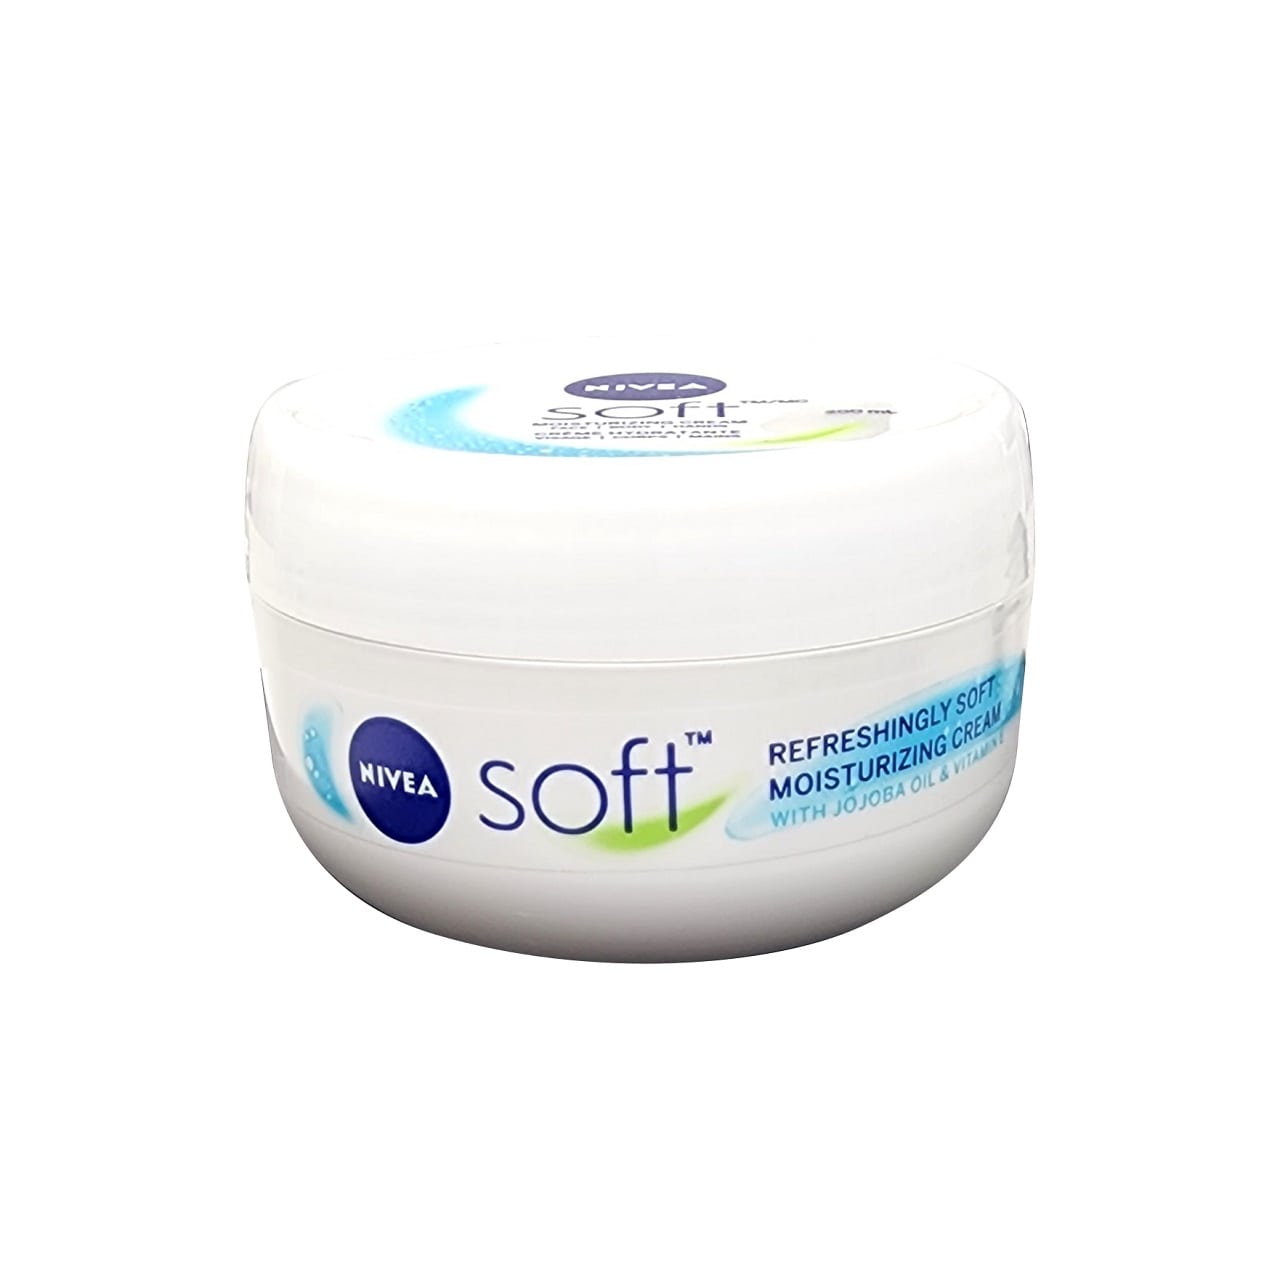 Product label for Nivea Soft Moisturizing Cream (200 mL)